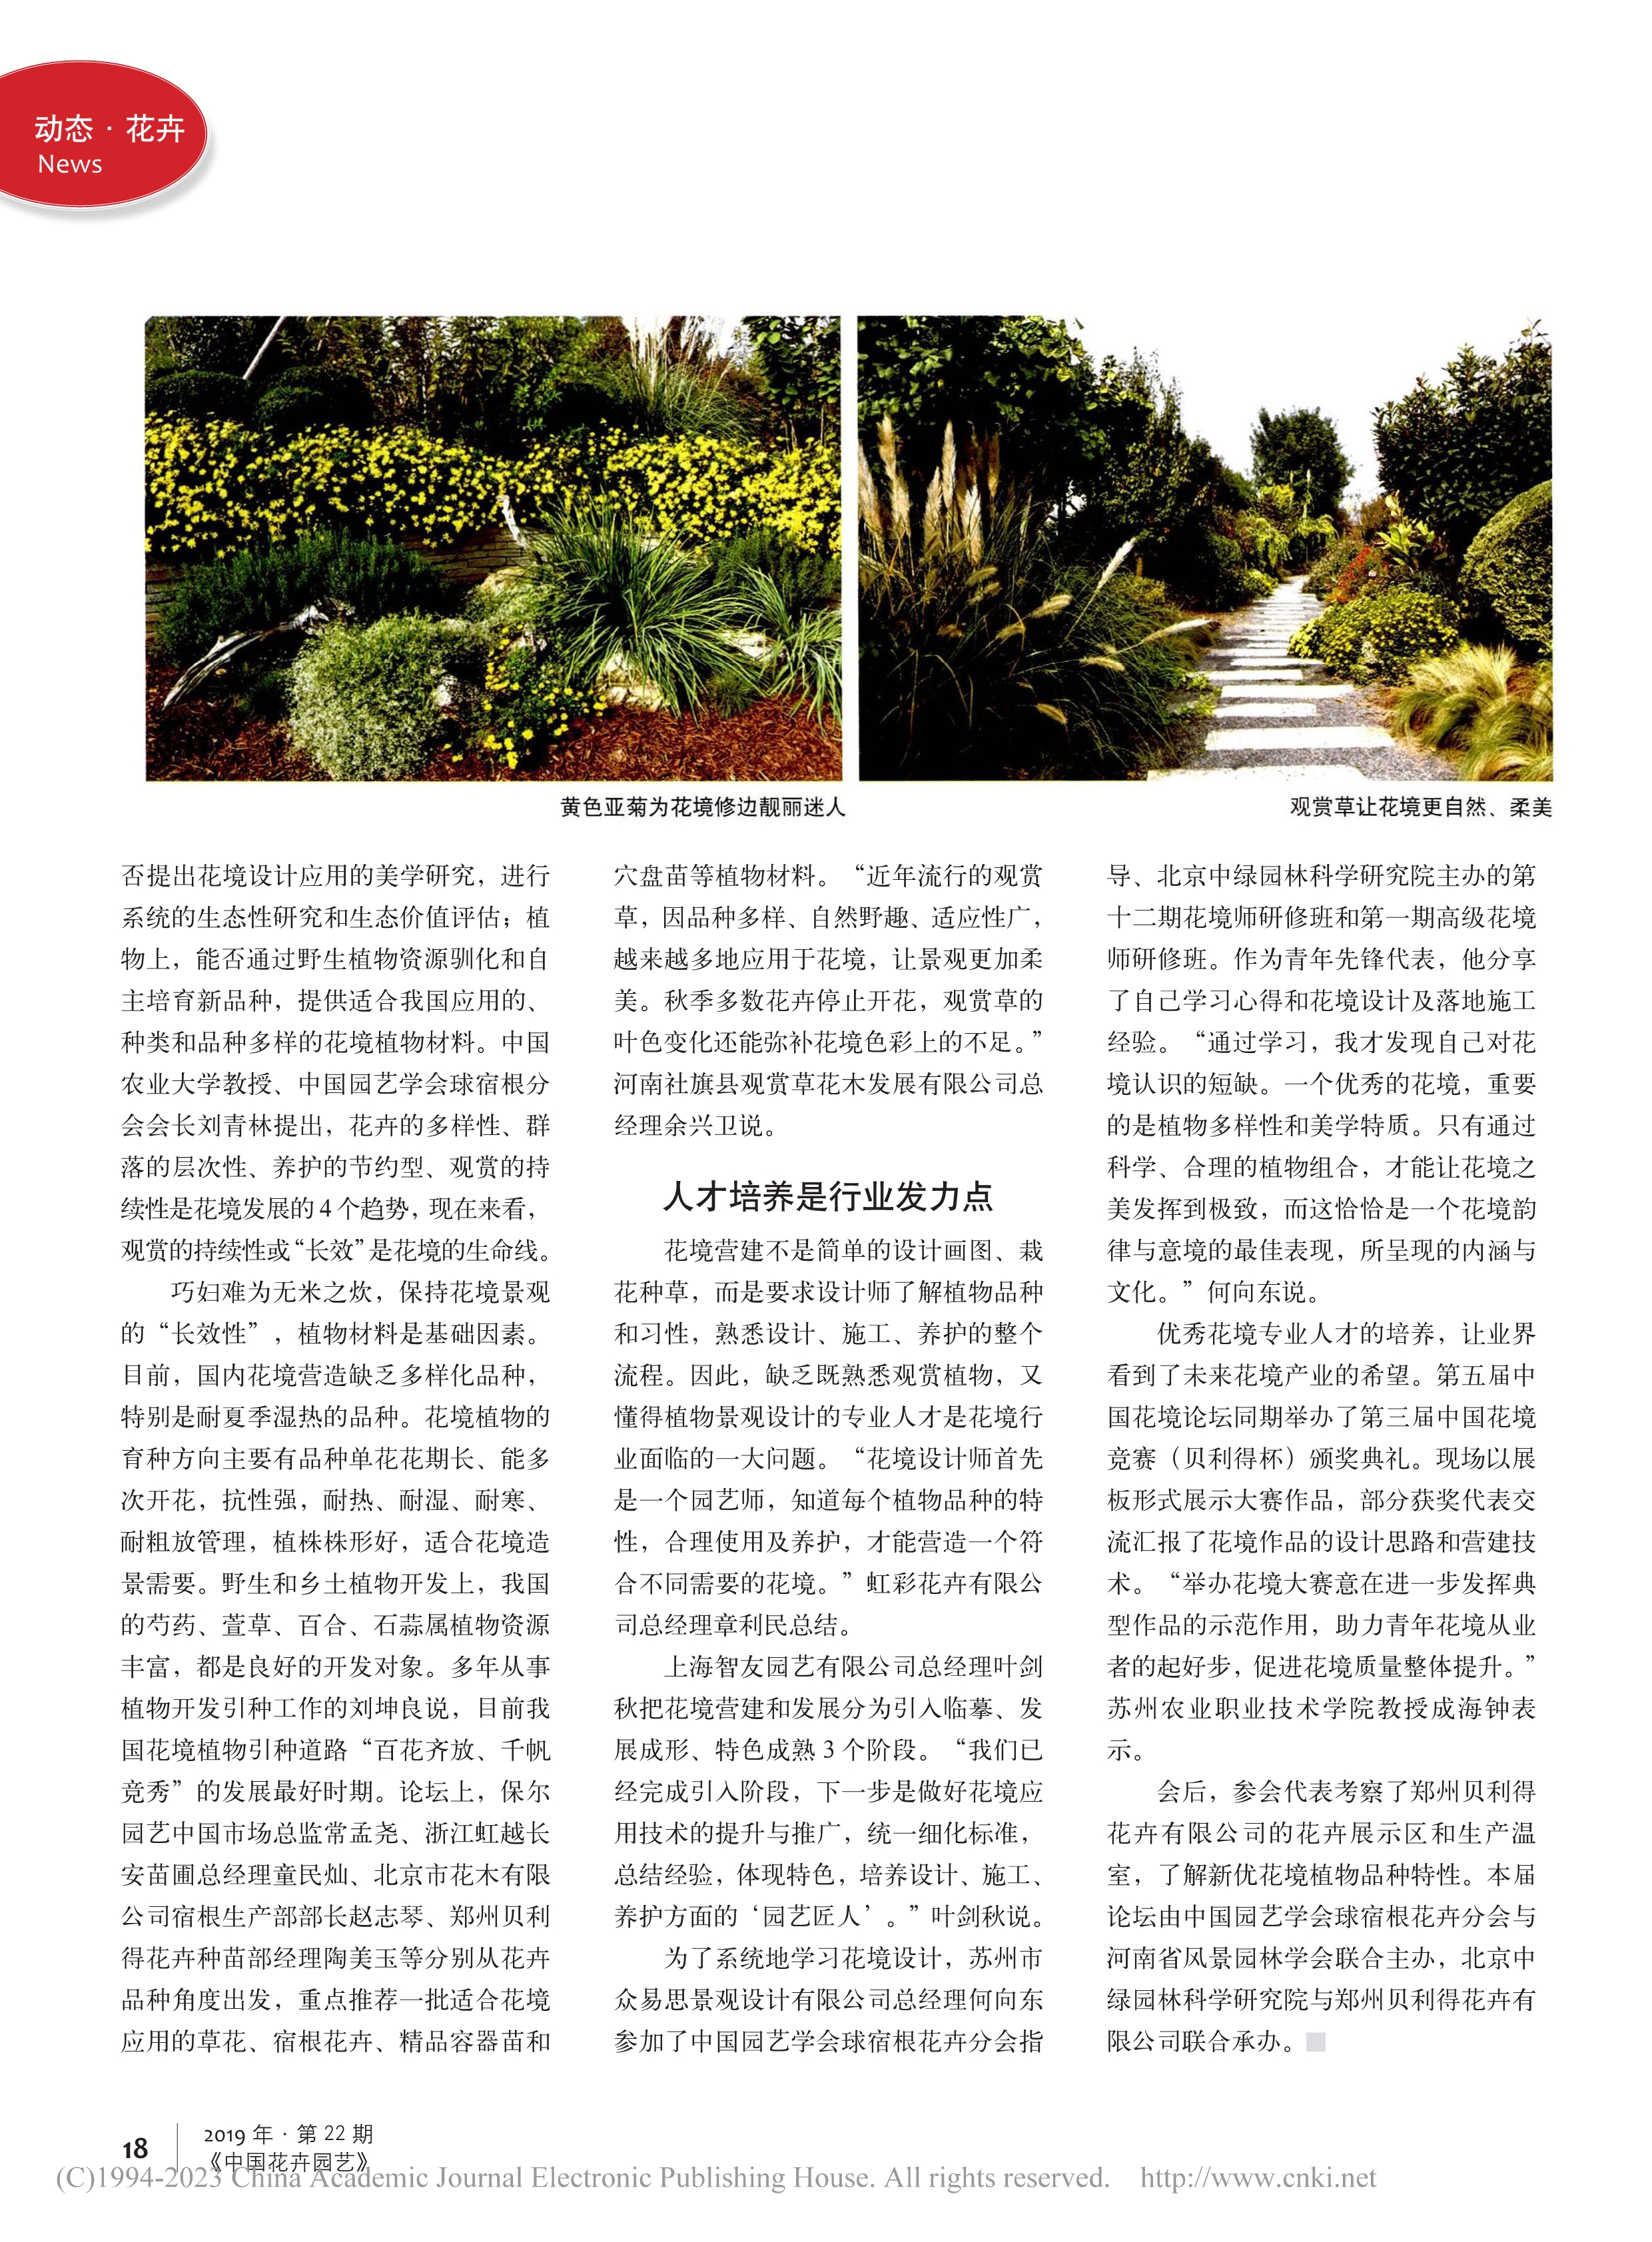 FB 05 如何走好花境发展未来之路—第五届中国花境论坛在郑州举办_李艳梅_2